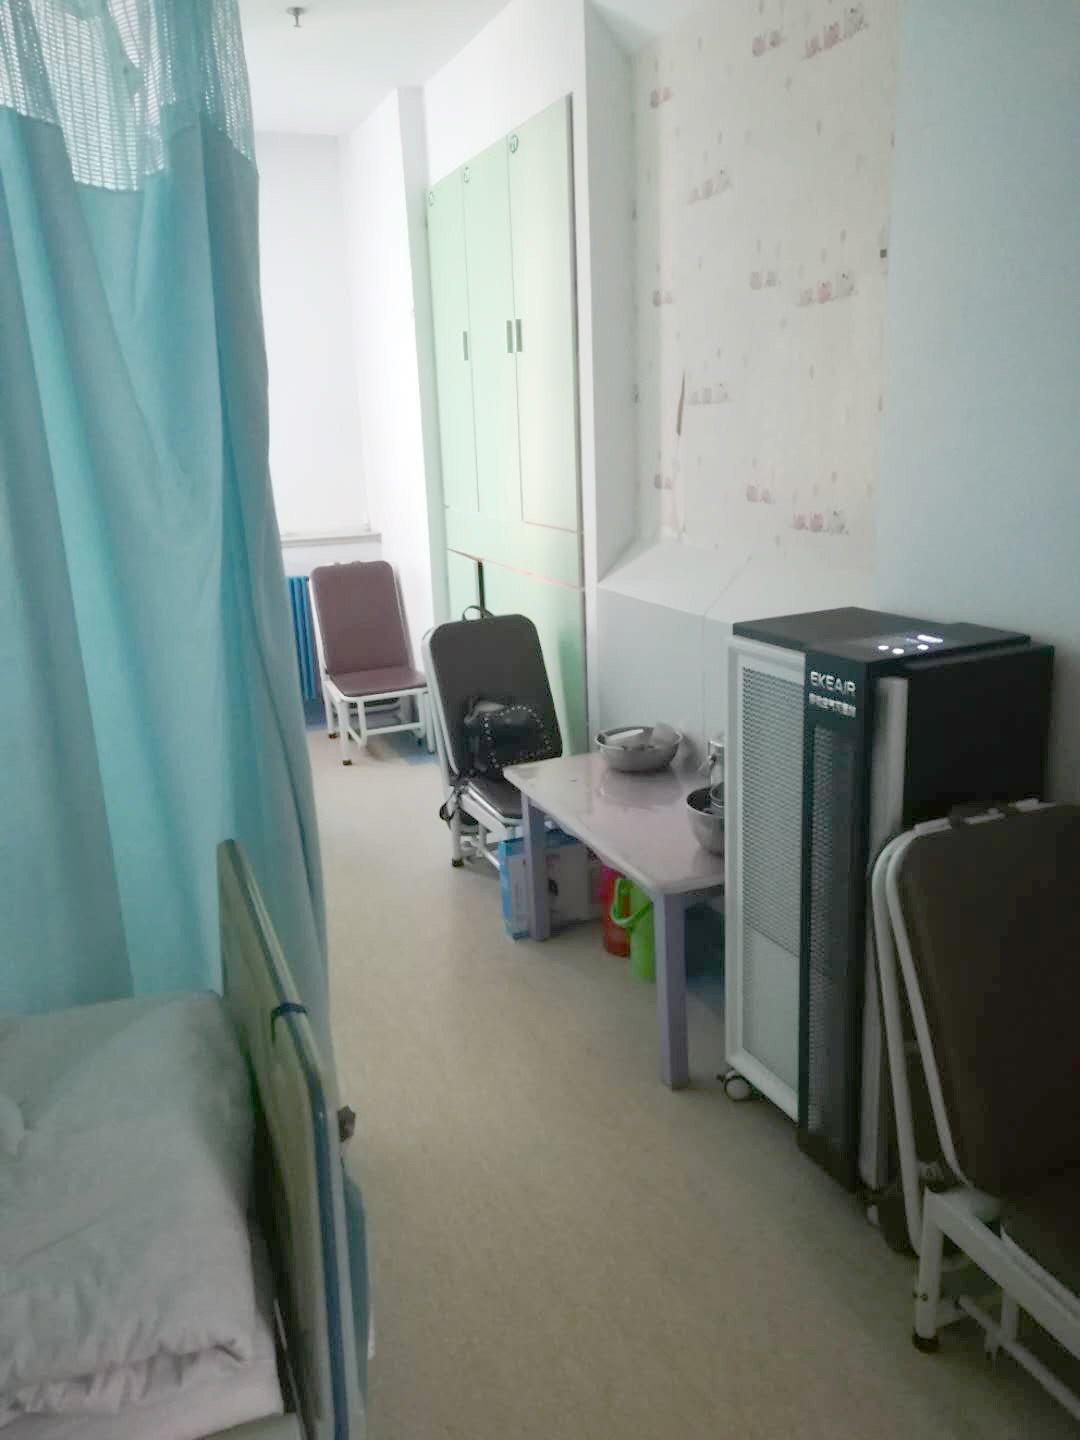 Latest company case about Shandong Provincal Hospital